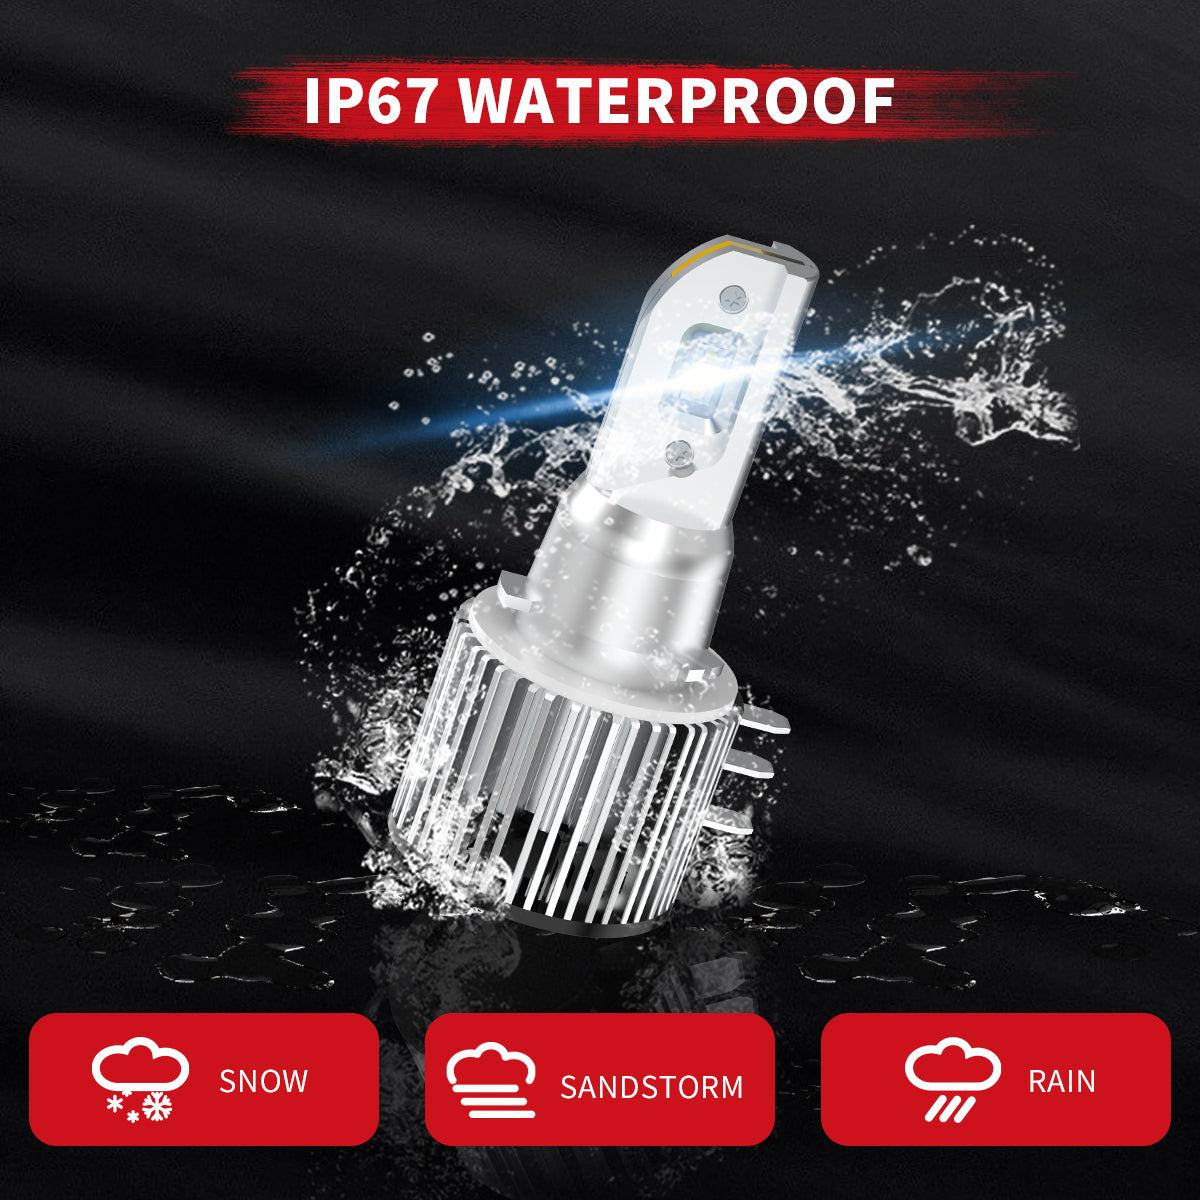 Ampoule H15 Full LED pour Ford Ranger